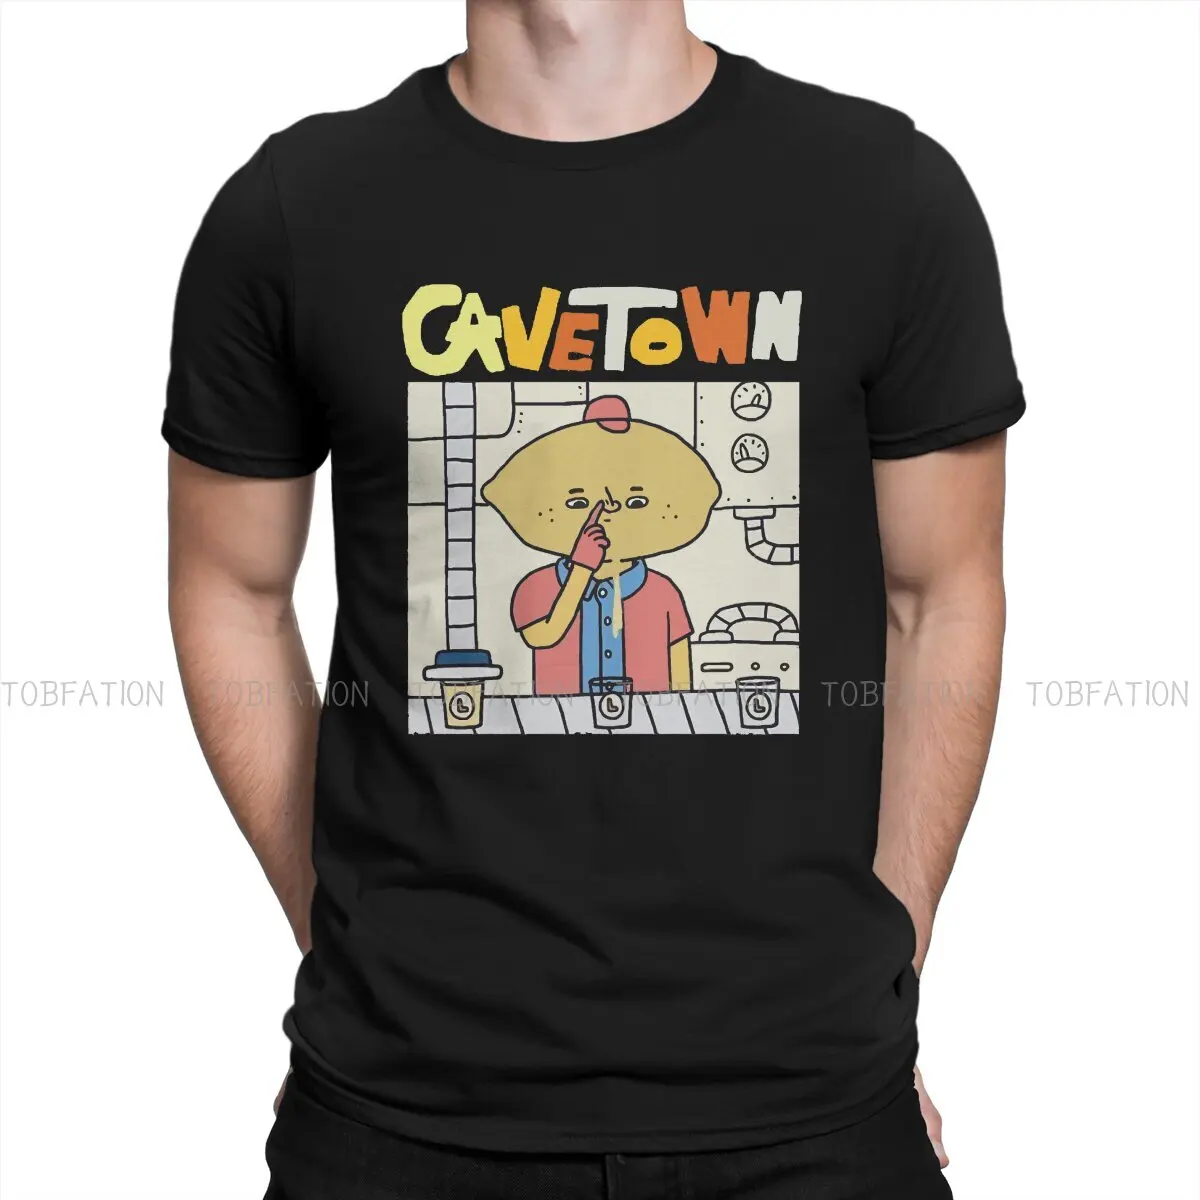 

Cavetown Lemon Boy England Singer Musician Original TShirts Funny Personalize Men's T Shirt New Trend Clothing Size S-6XL